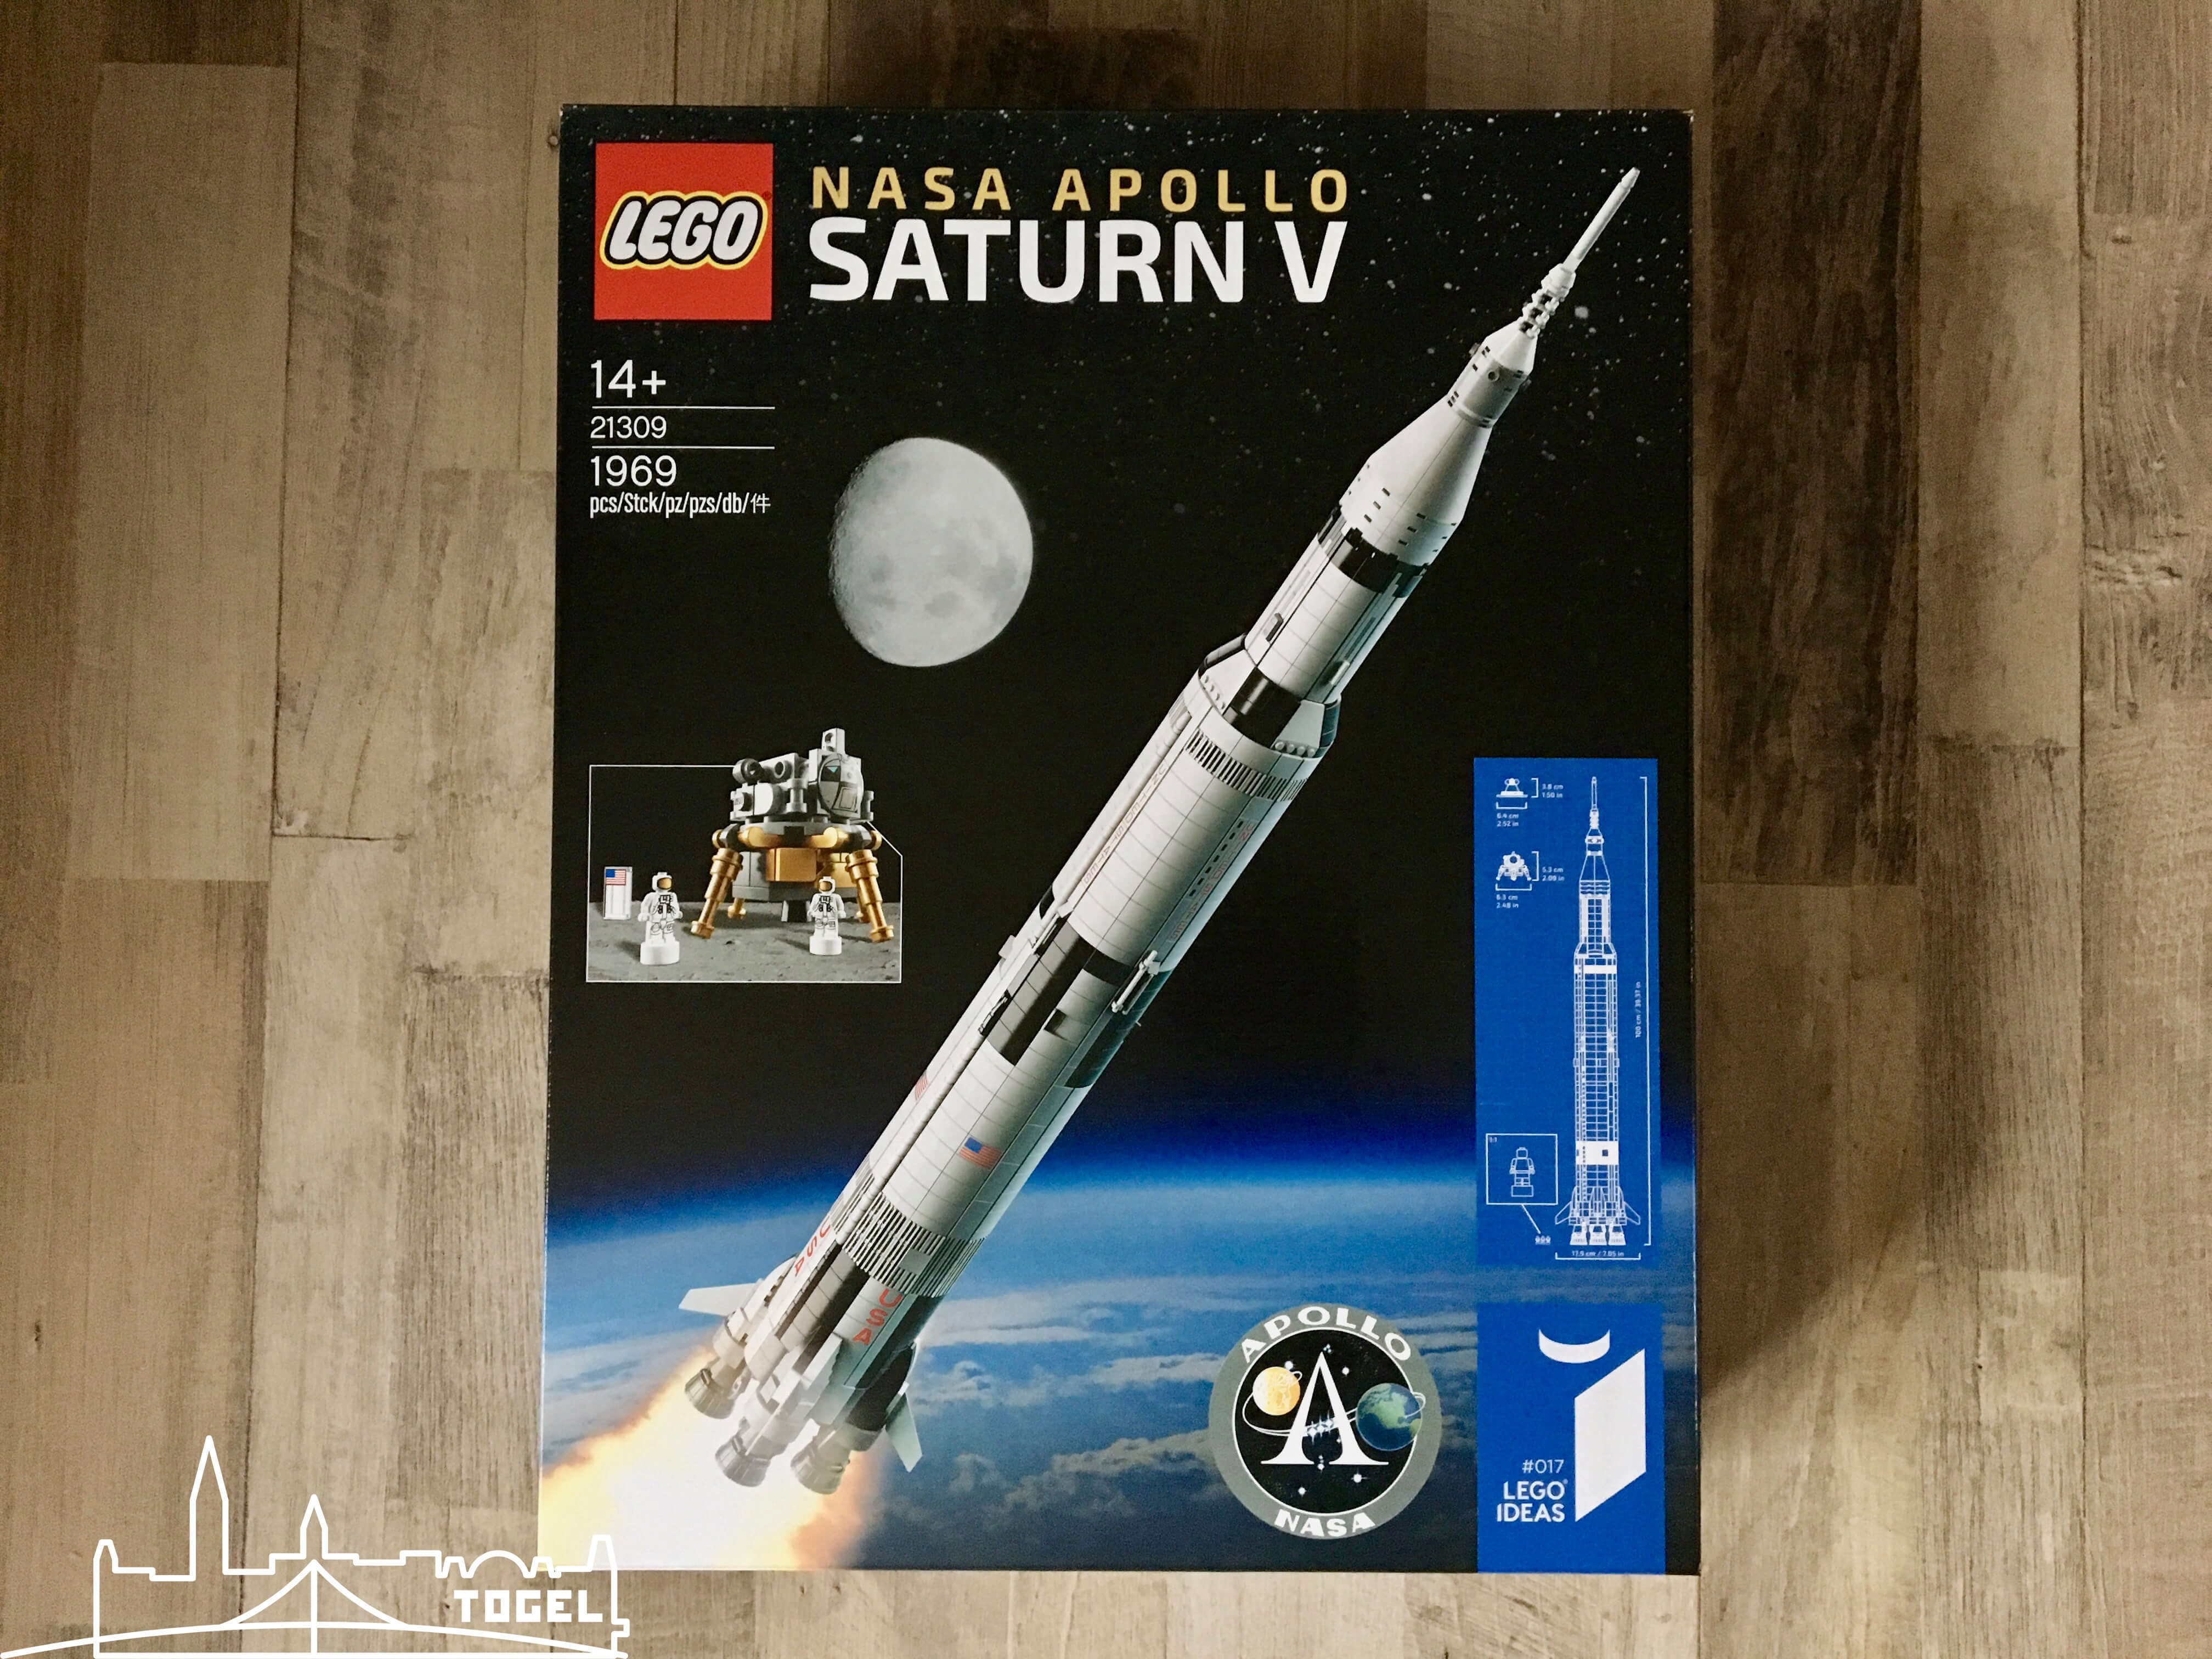 Lego Ideas NASA Apollo Saturn V 21309 zählt zu den 5 besten Lego Sets 2017